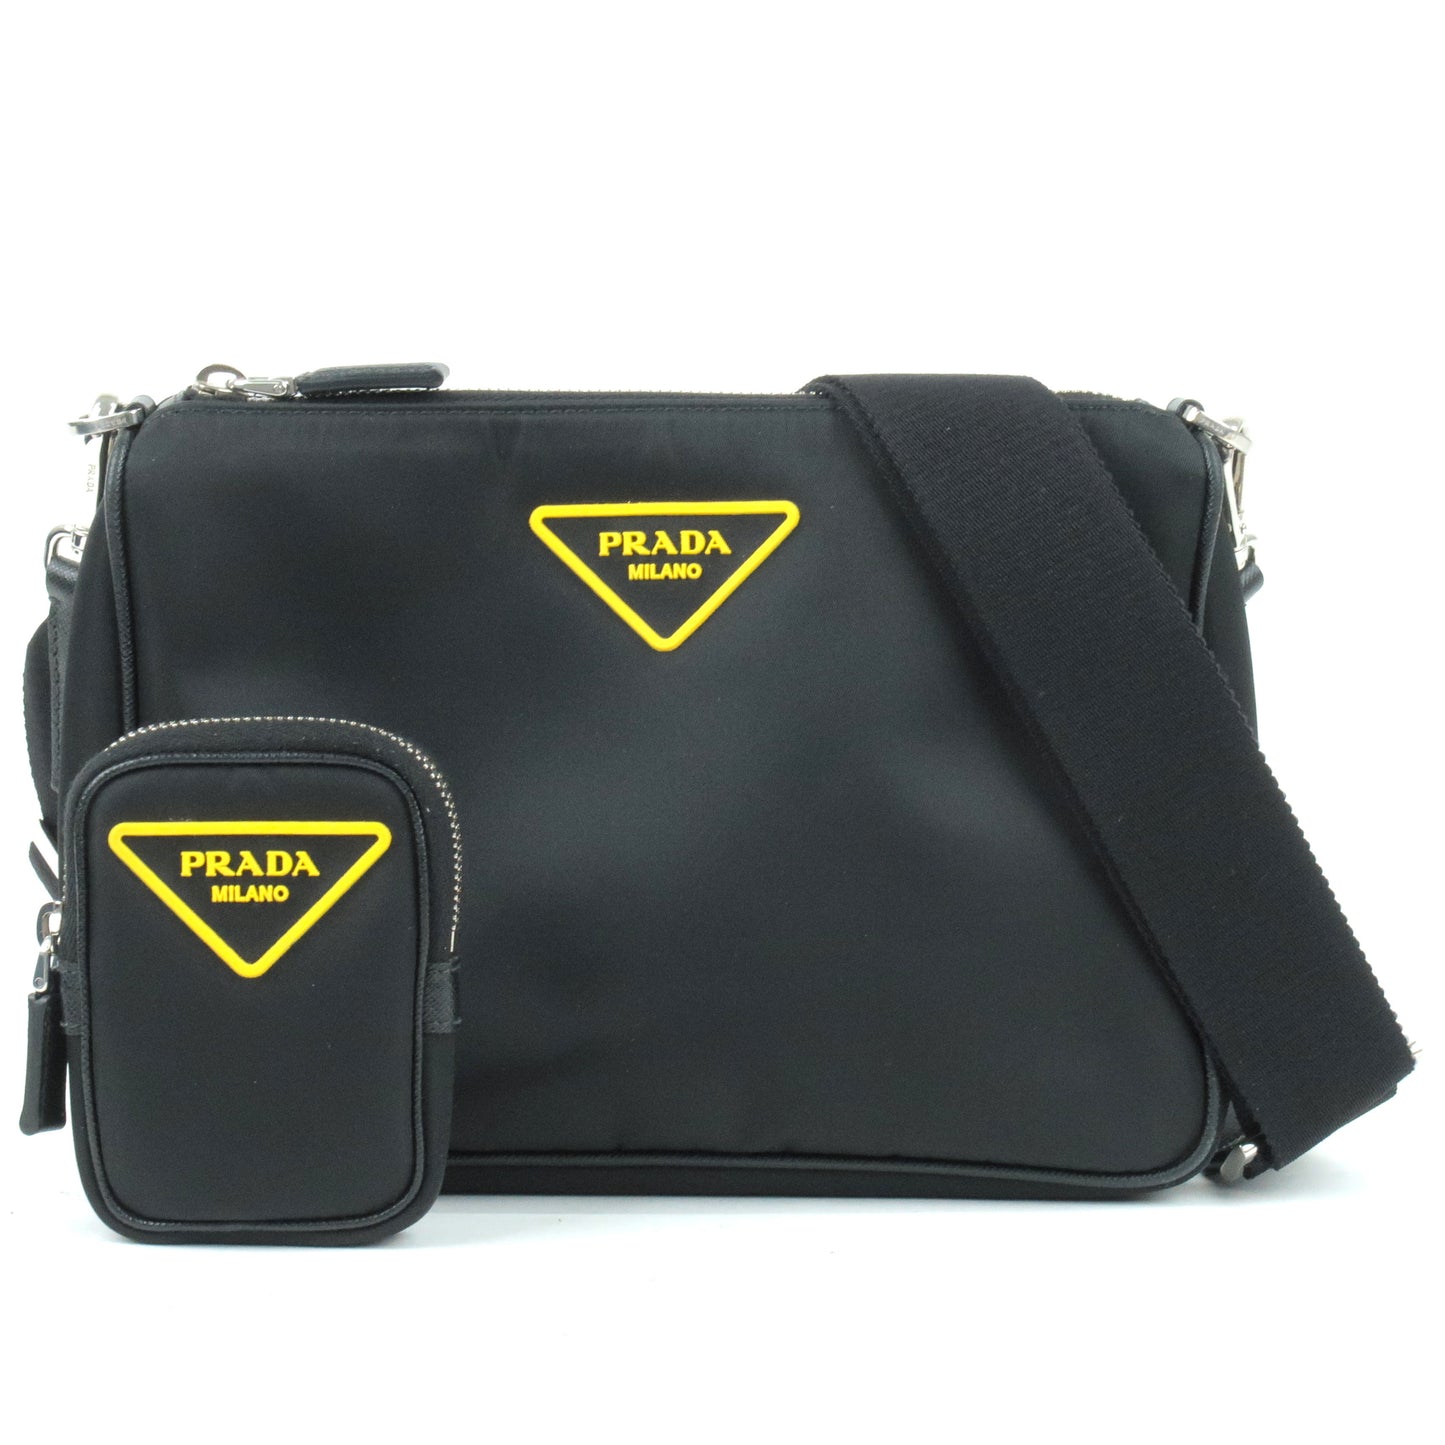 PRADA-Logo-Nylon-Leather-Shoulder-Bag-Black-Yellow-2VH113